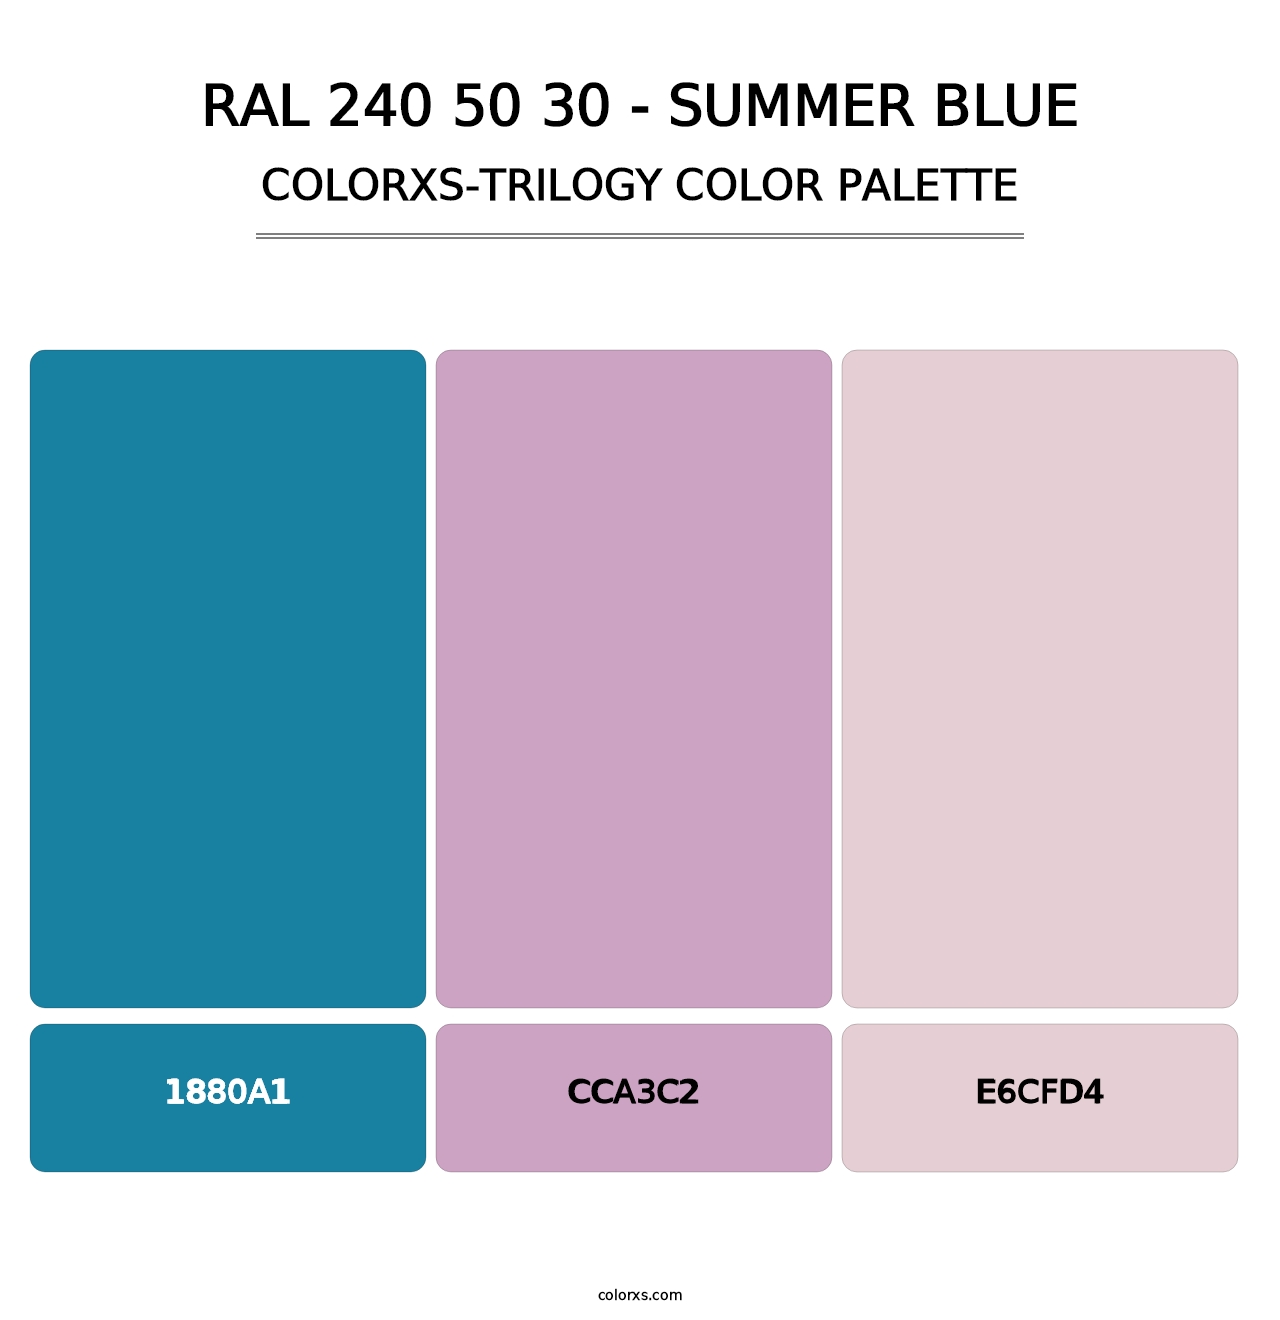 RAL 240 50 30 - Summer Blue - Colorxs Trilogy Palette